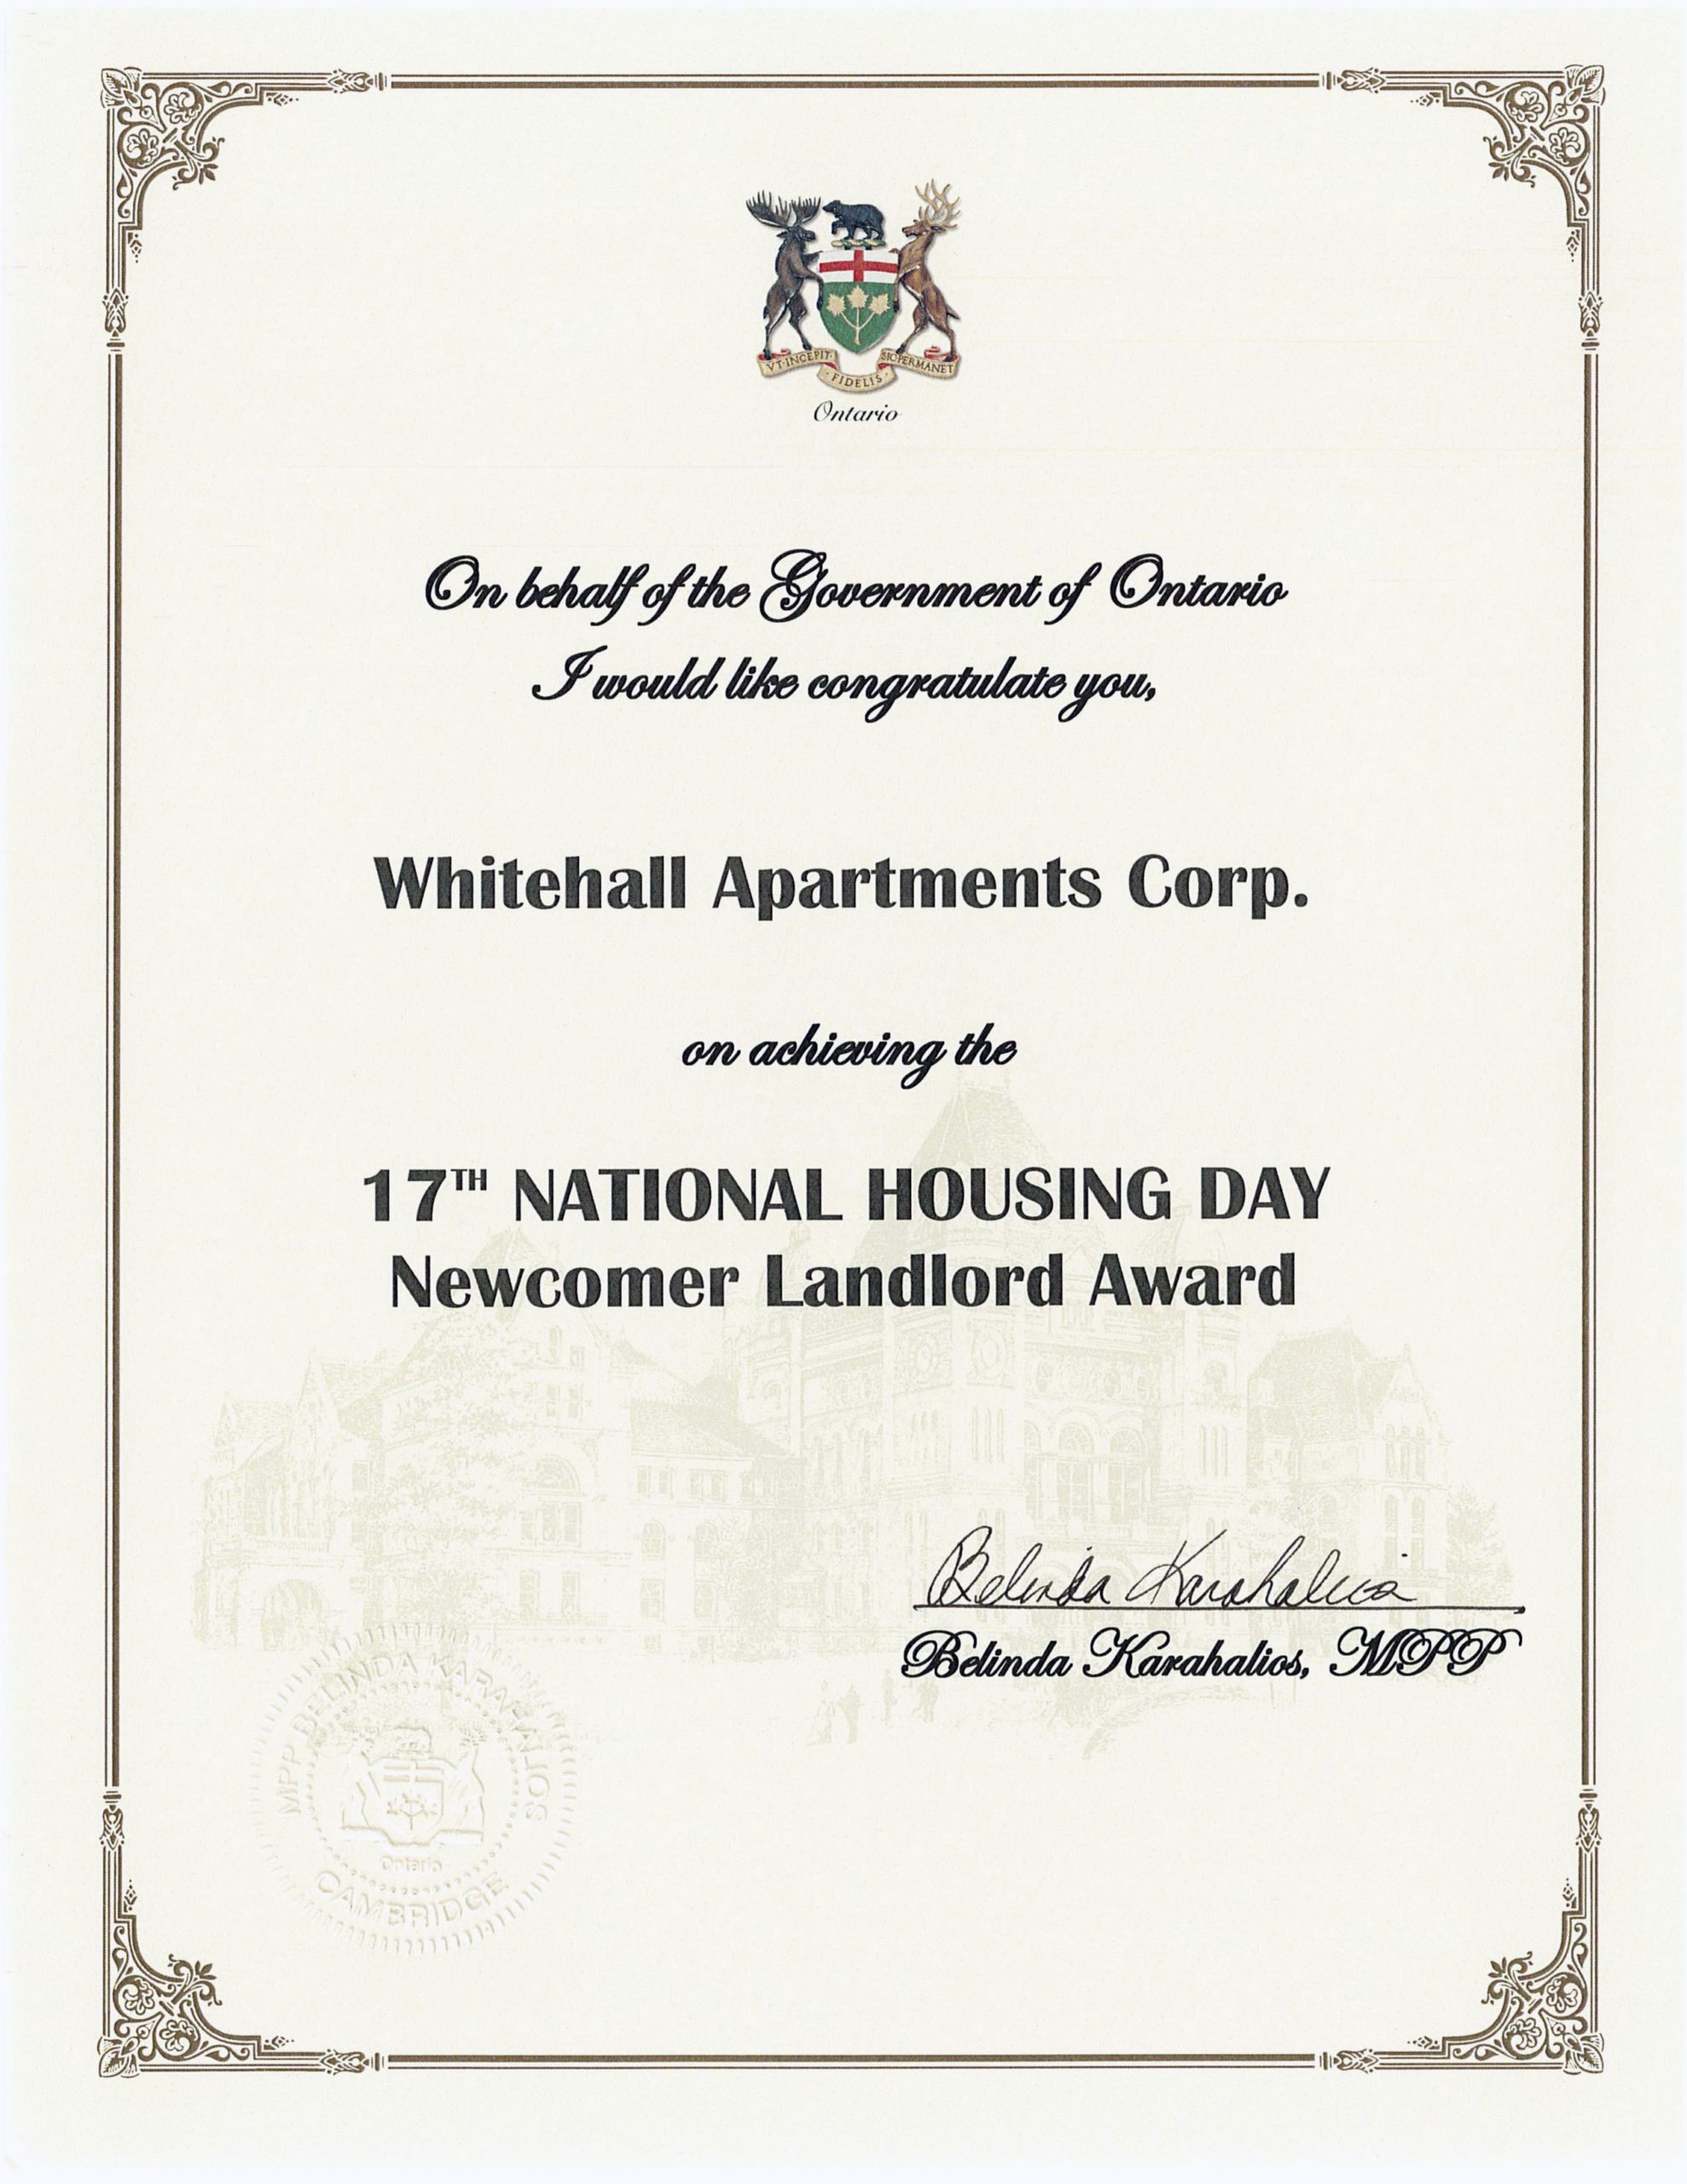 Newcomer Landlord Award 2018